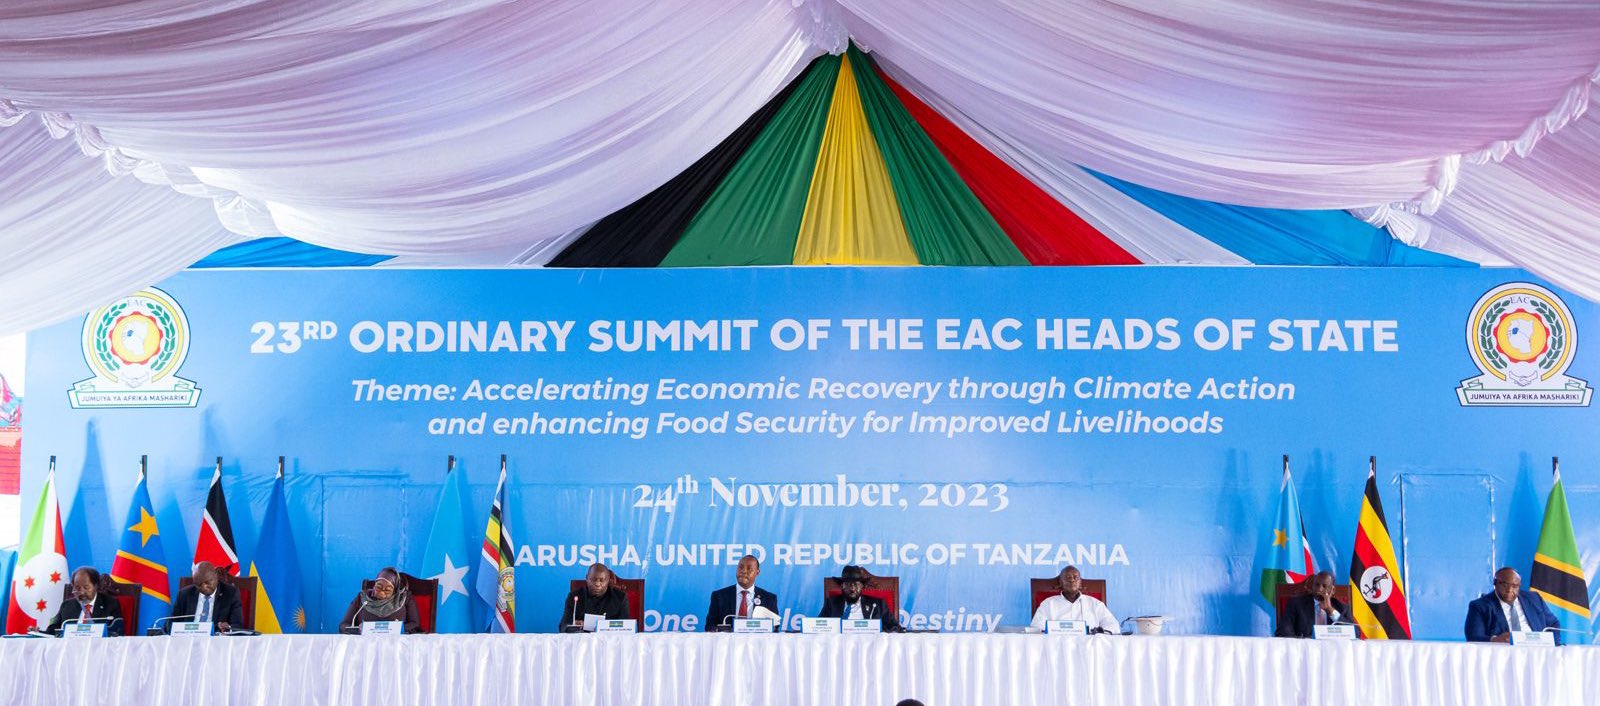 Somalia becomes 8th member of EAC